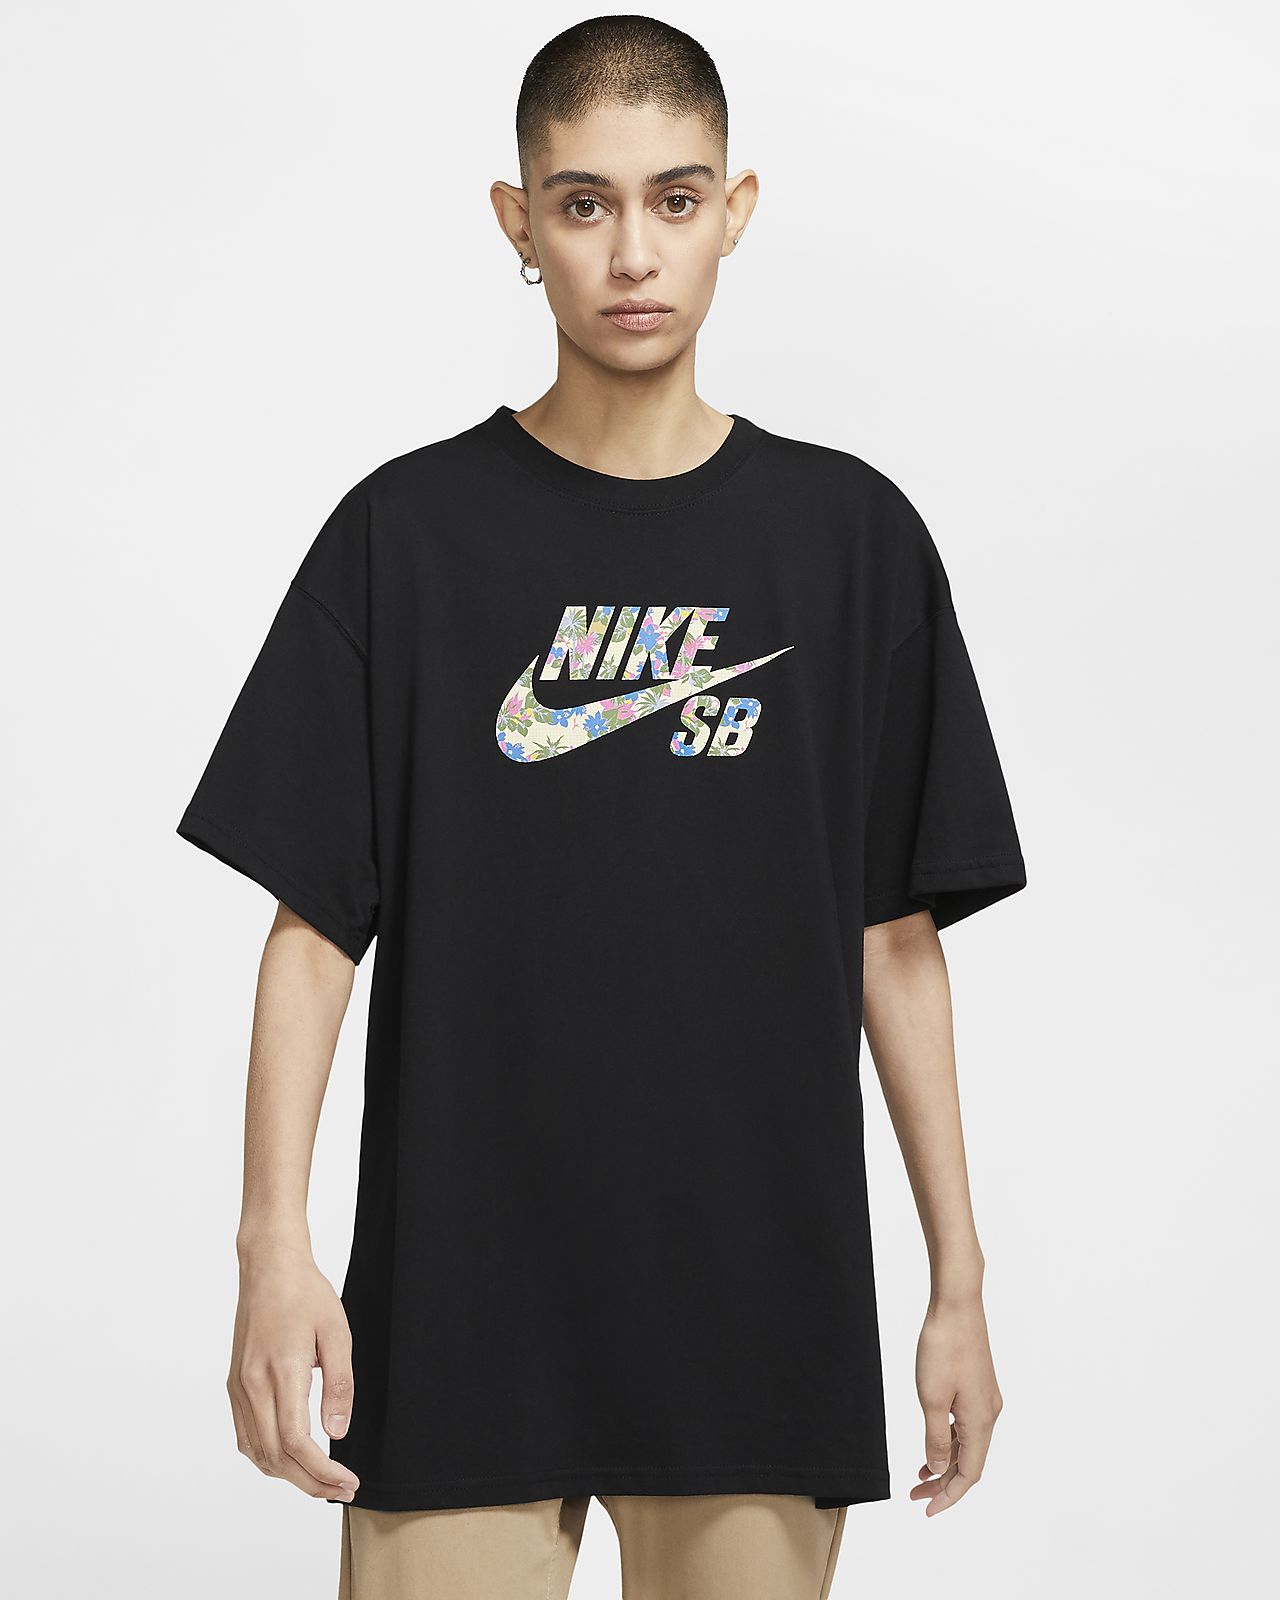 Nike Sb Skateboard T Shirt Mit Logo Fur Herren Nike Ch